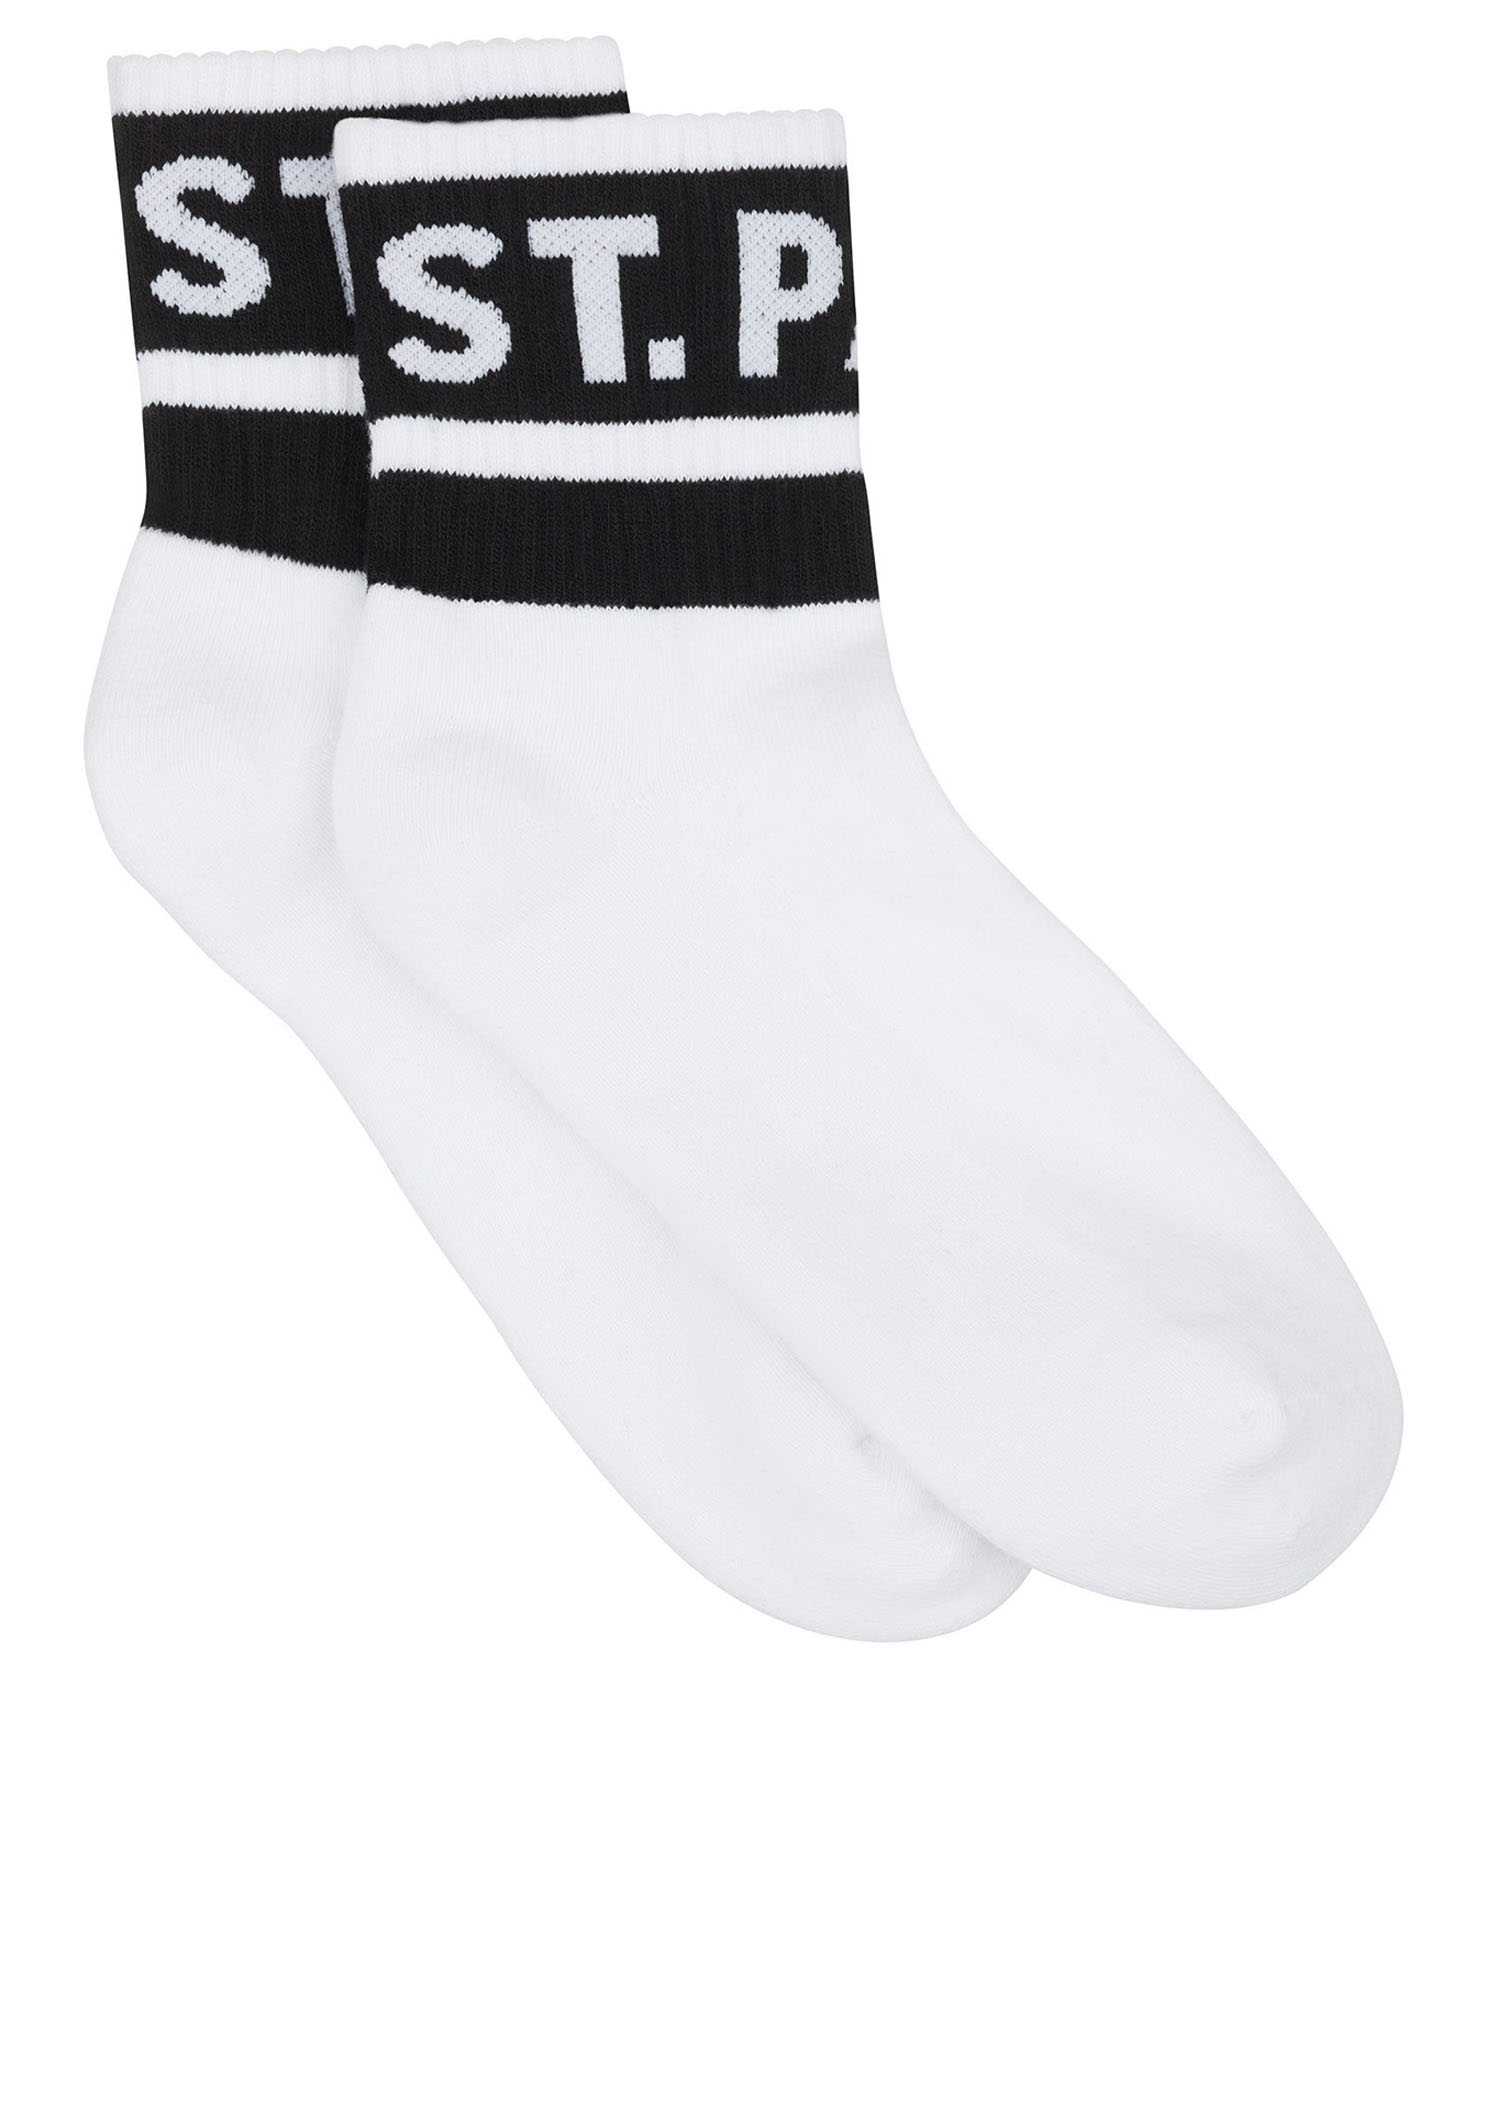 Socks "St. Pauli" - short